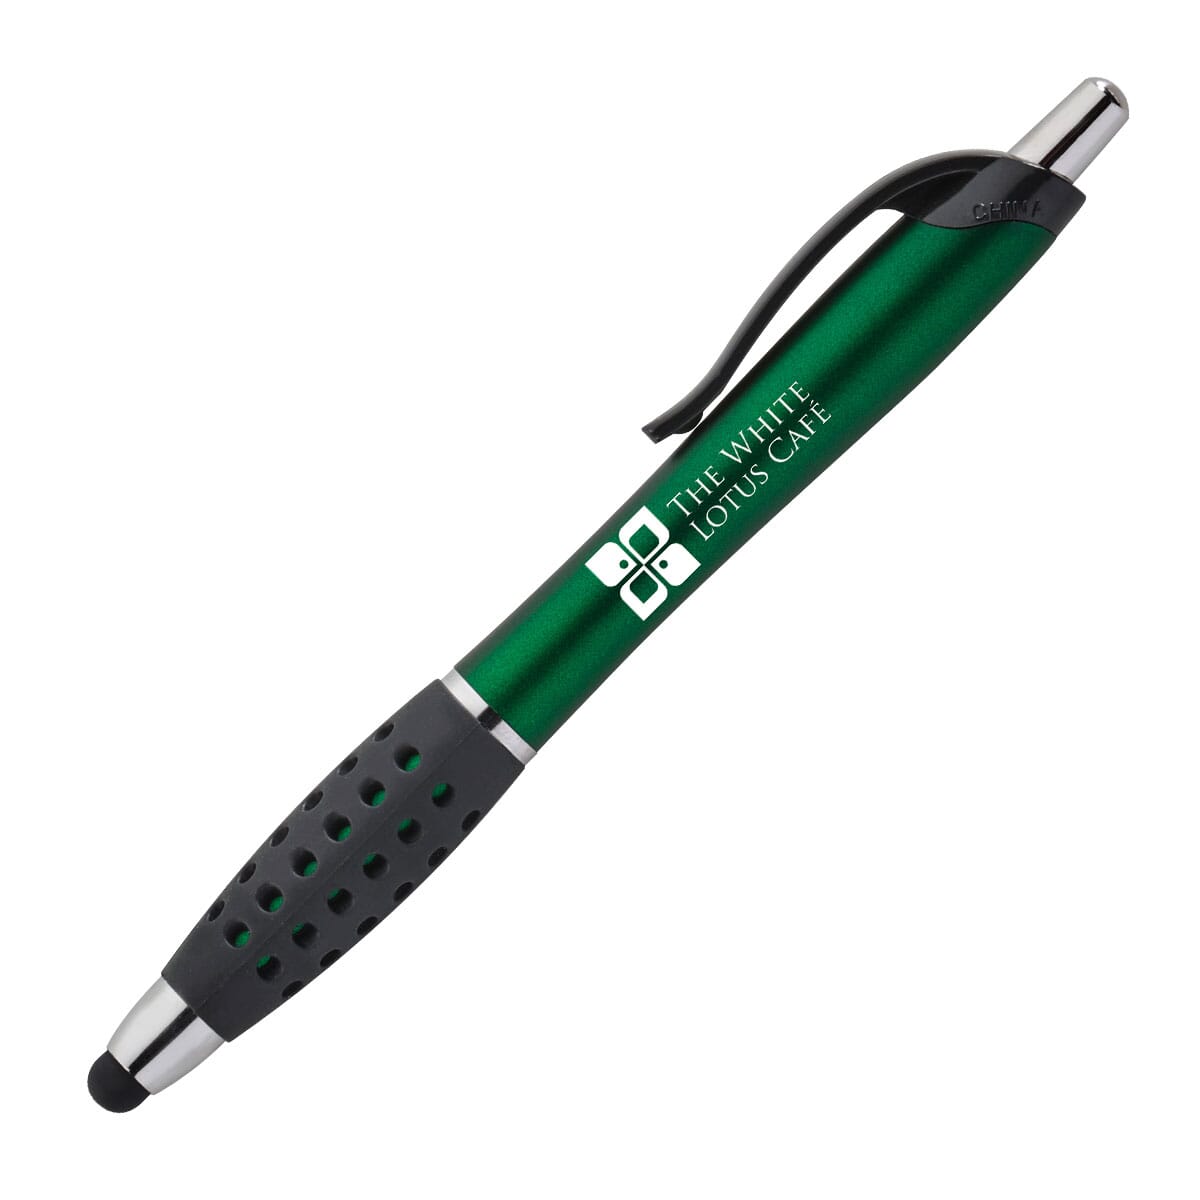 Dark Green pen with ergonomic grip